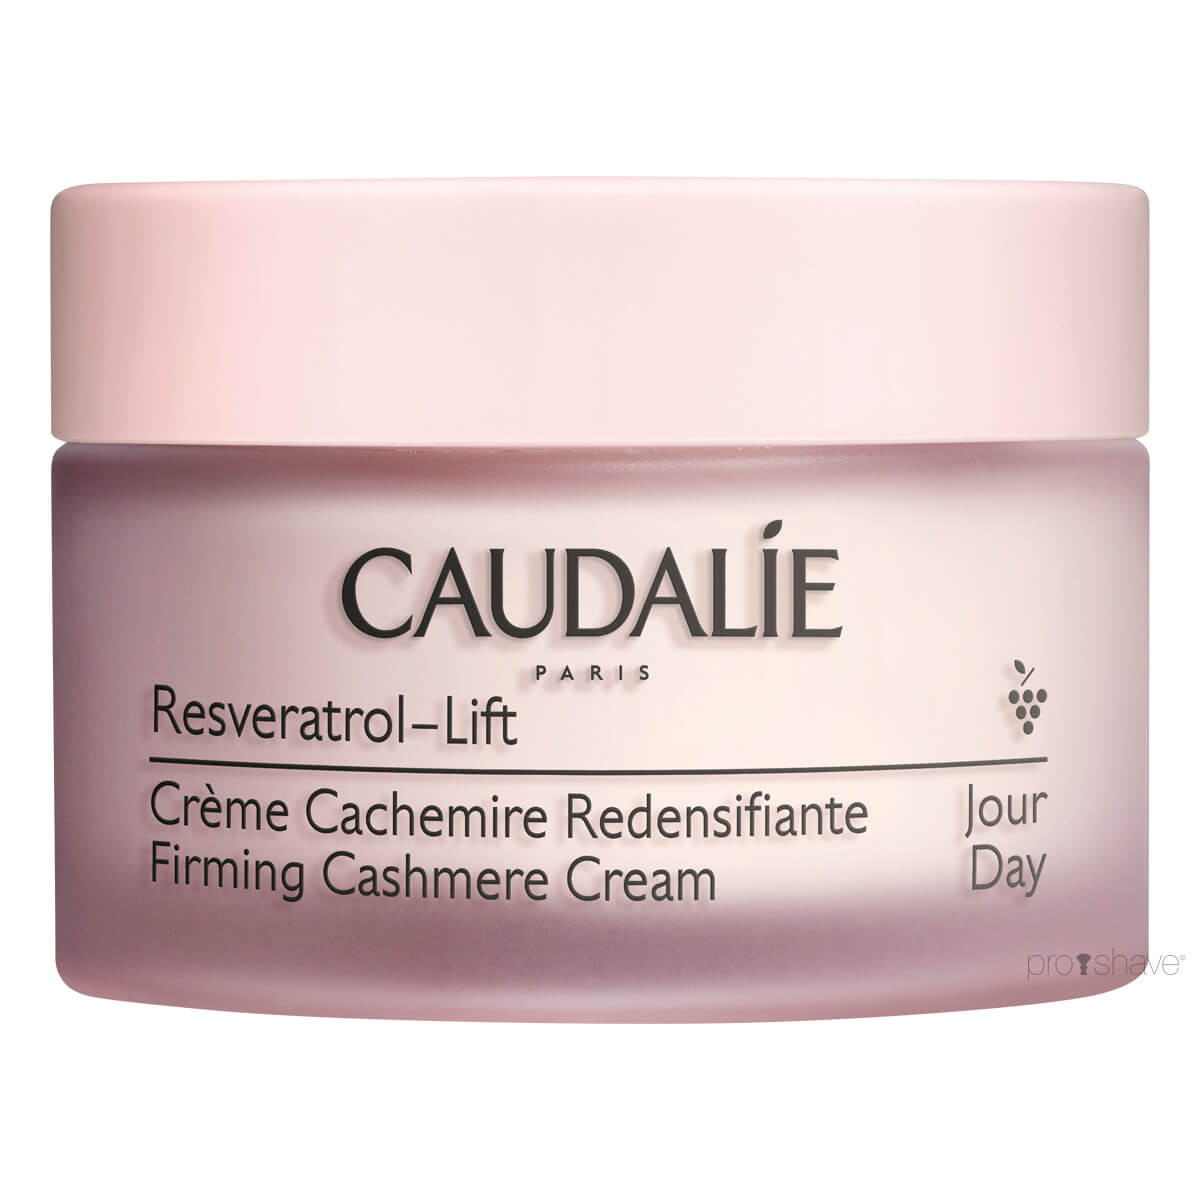 4: Caudalie Resveratrol Lift, Firming Cashmere Cream, Rejsestørrelse, 15 ml.